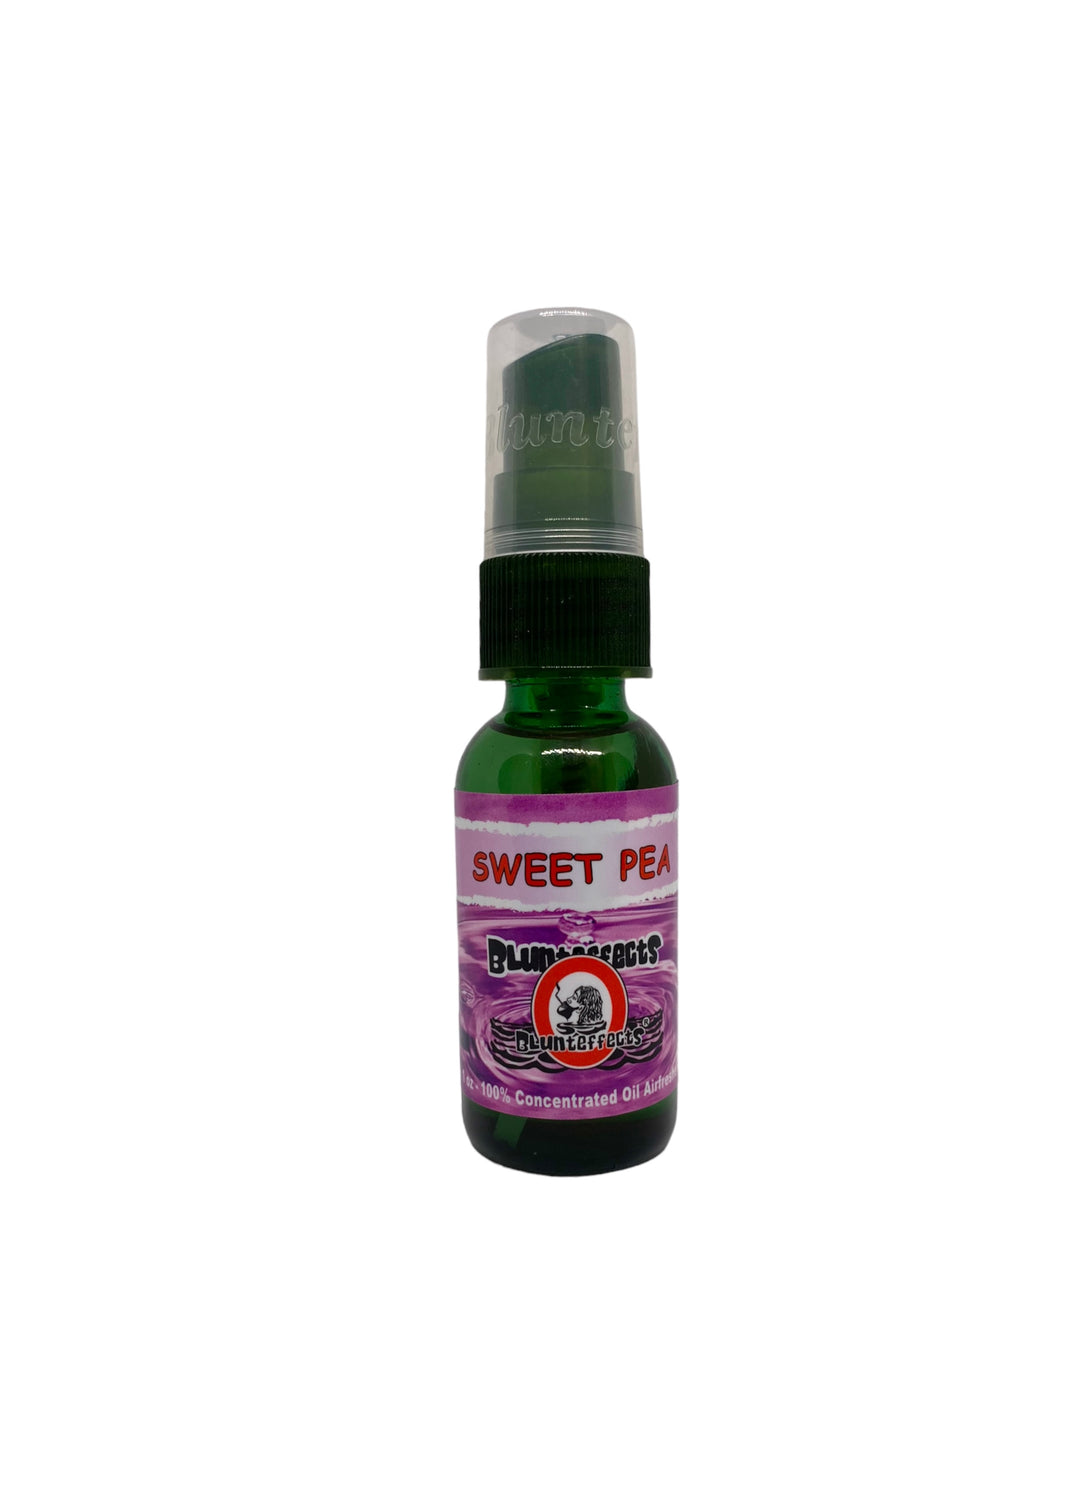 Blunteffects Sweet Pea Spray Air-Freshener 1 OZ.